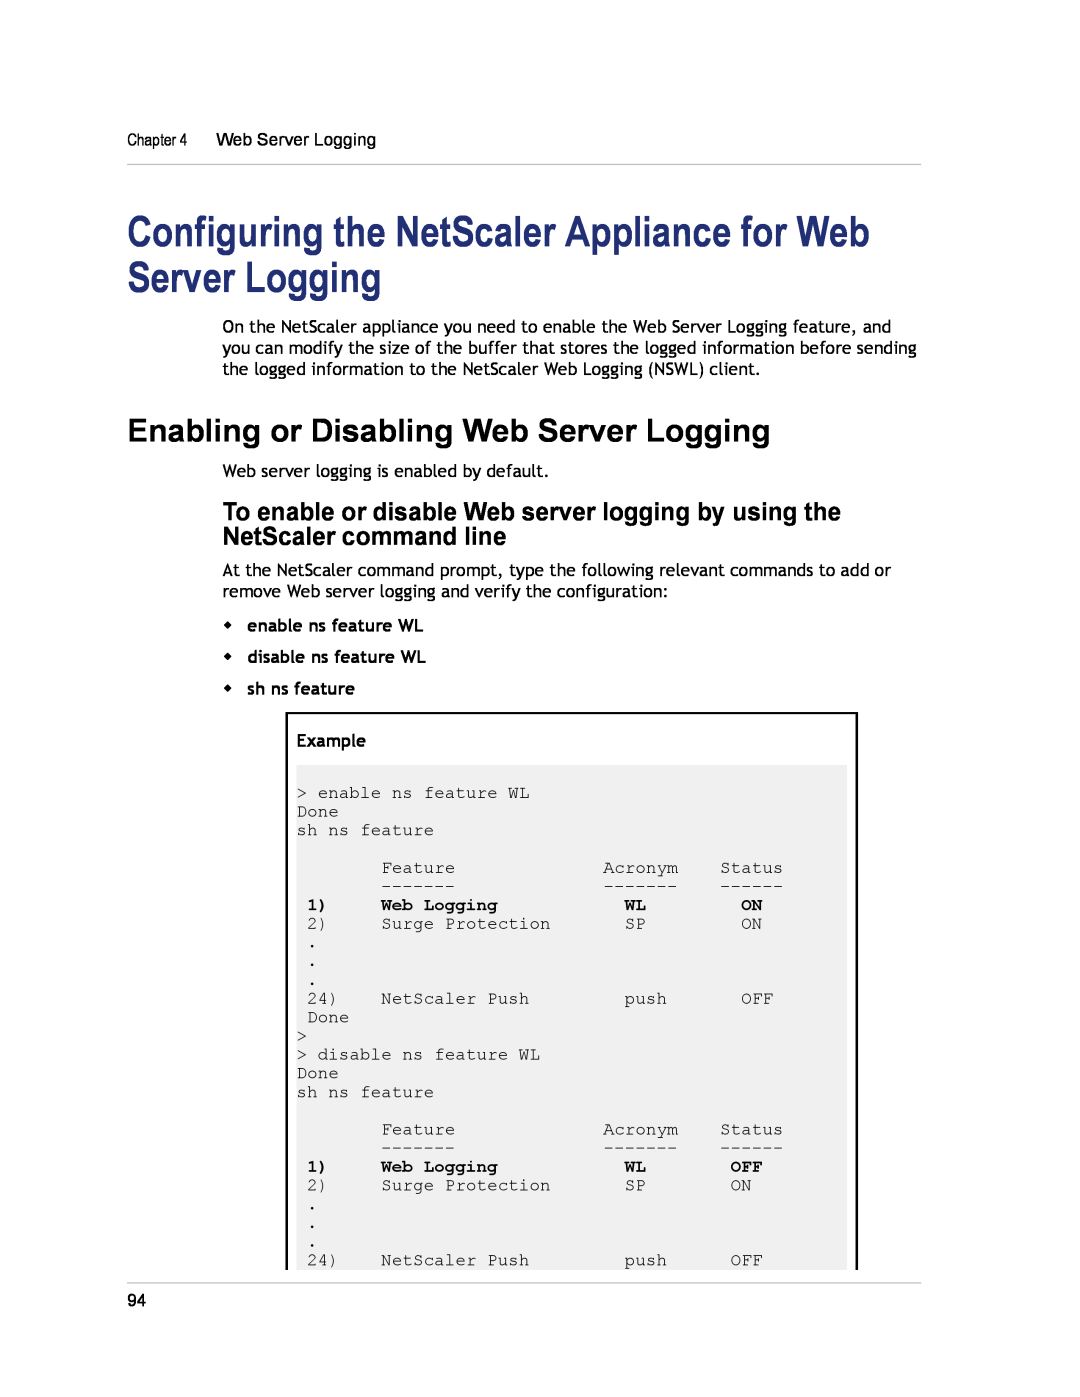 Citrix Systems CITRIX NETSCALER 9.3 manual Configuring the NetScaler Appliance for Web Server Logging, Web Logging, Example 